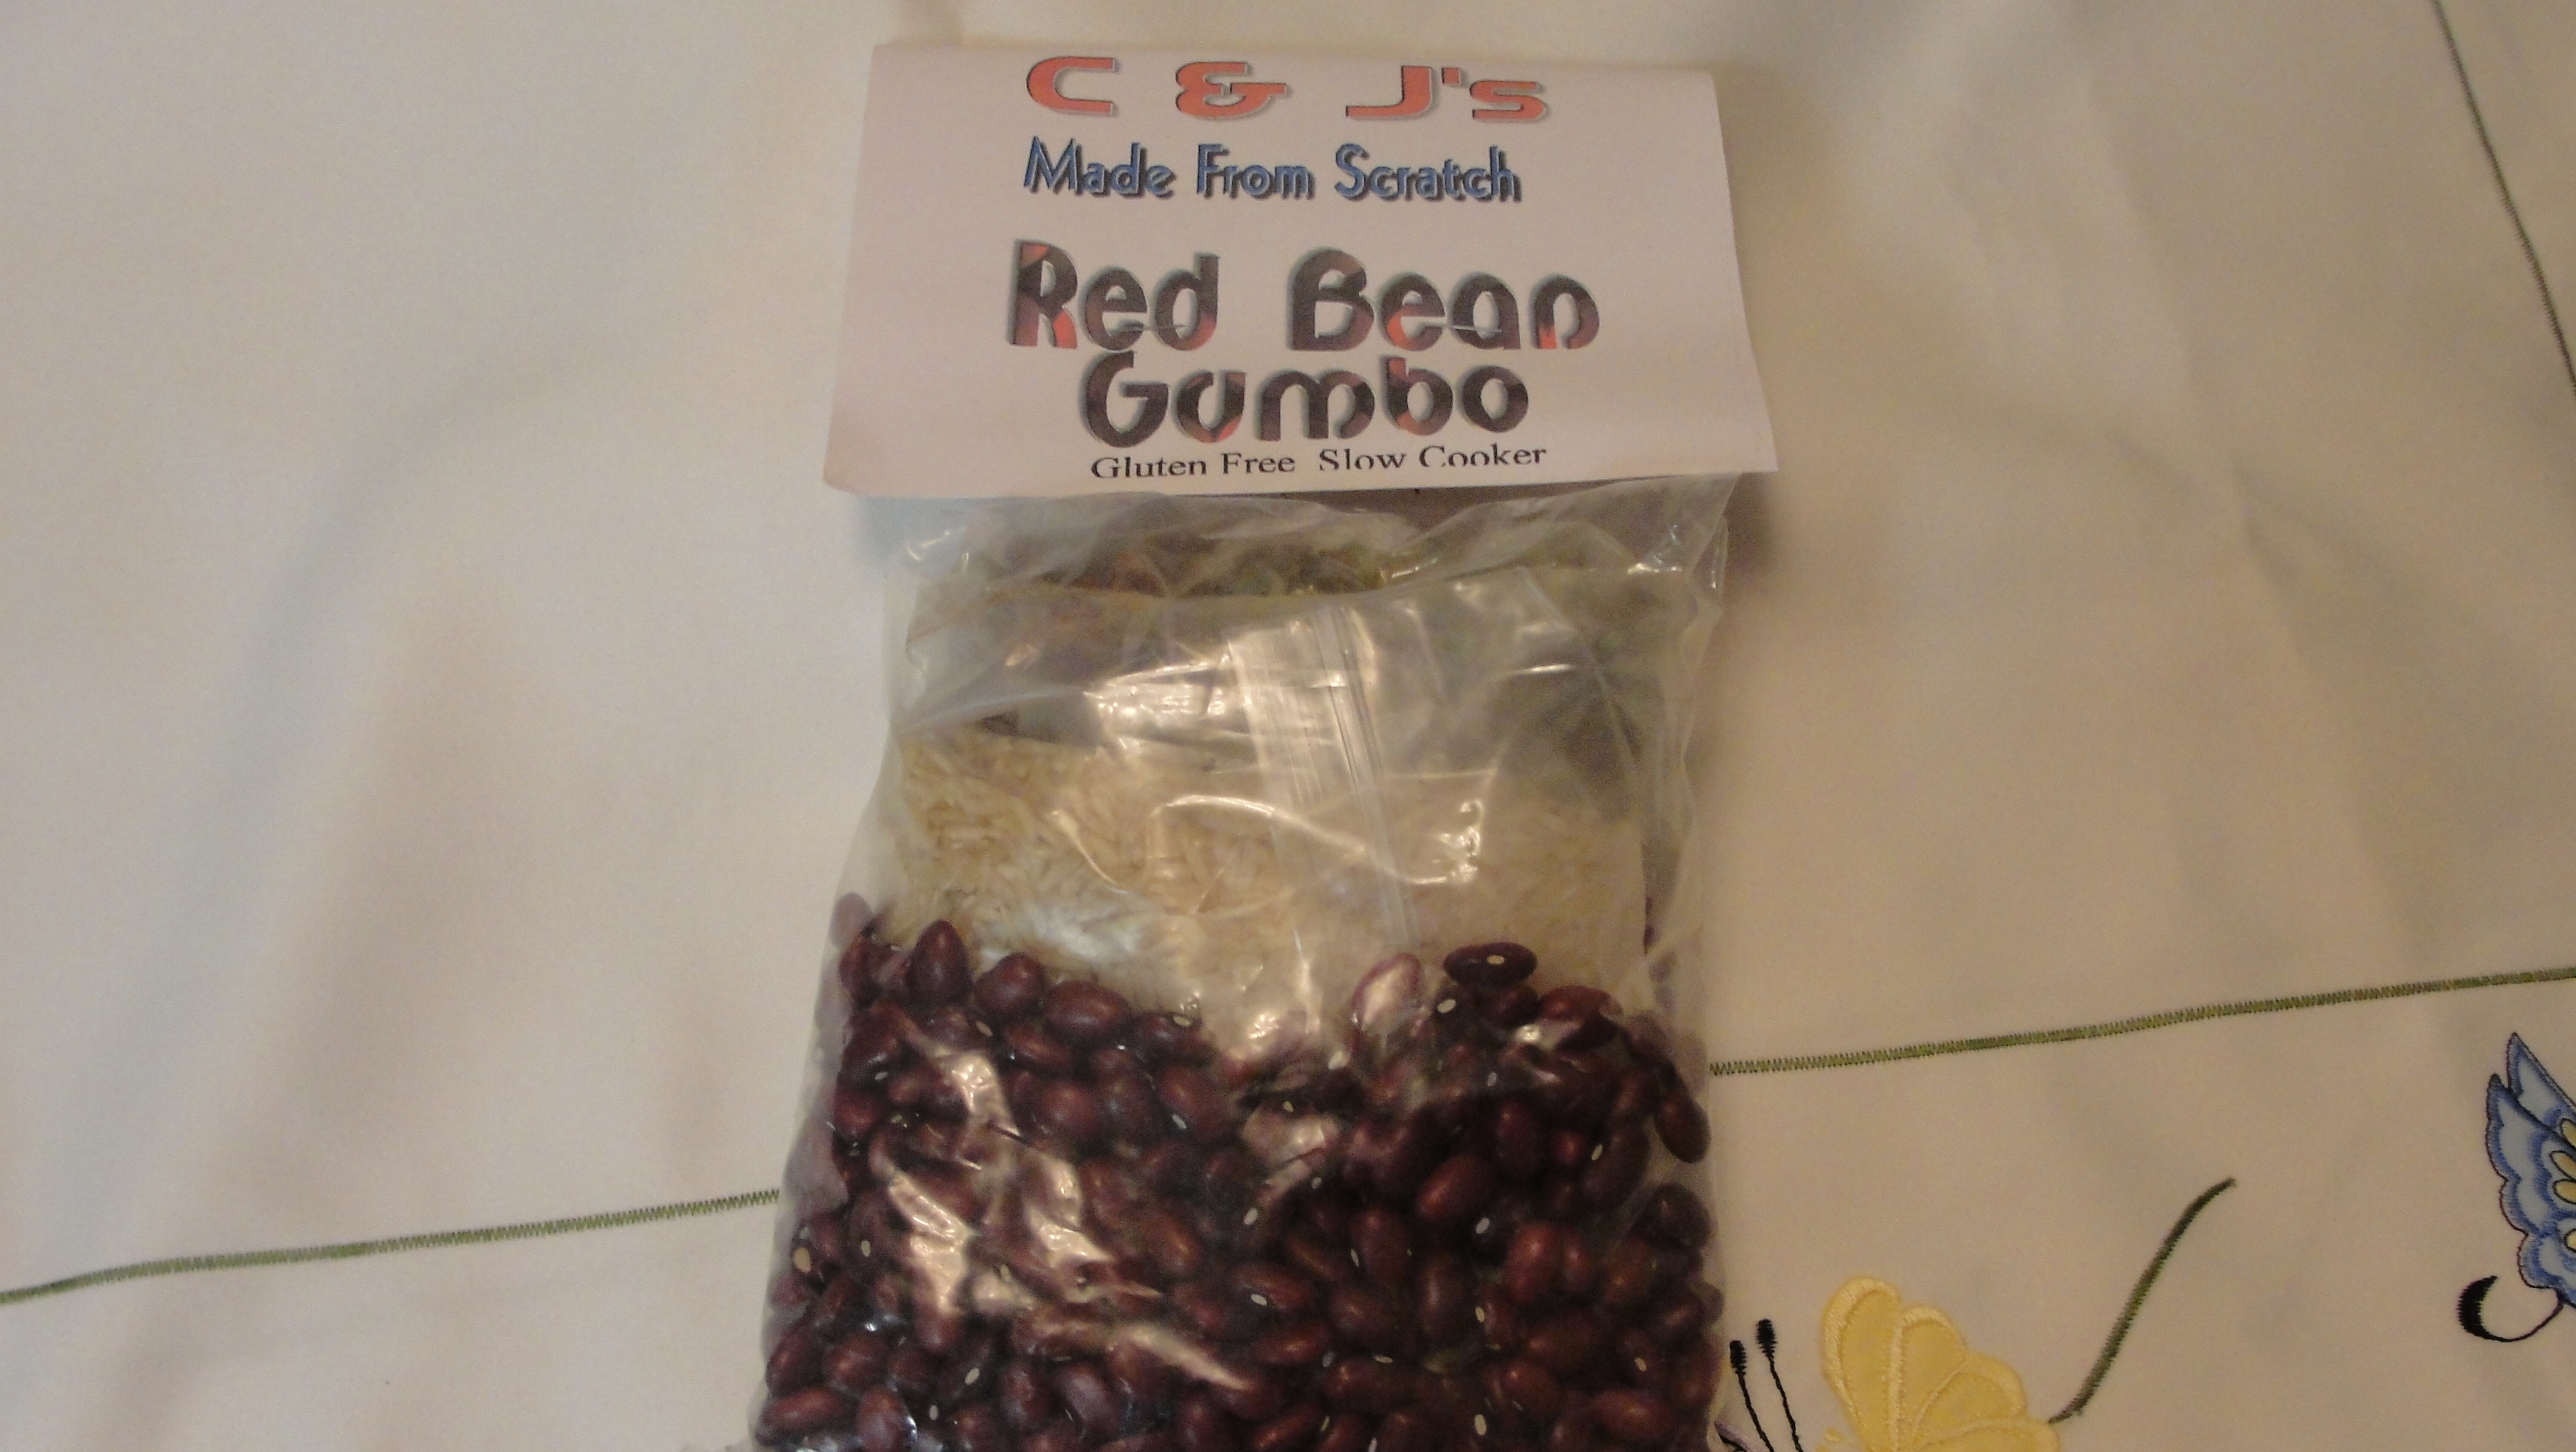 Red Bean Gumbo